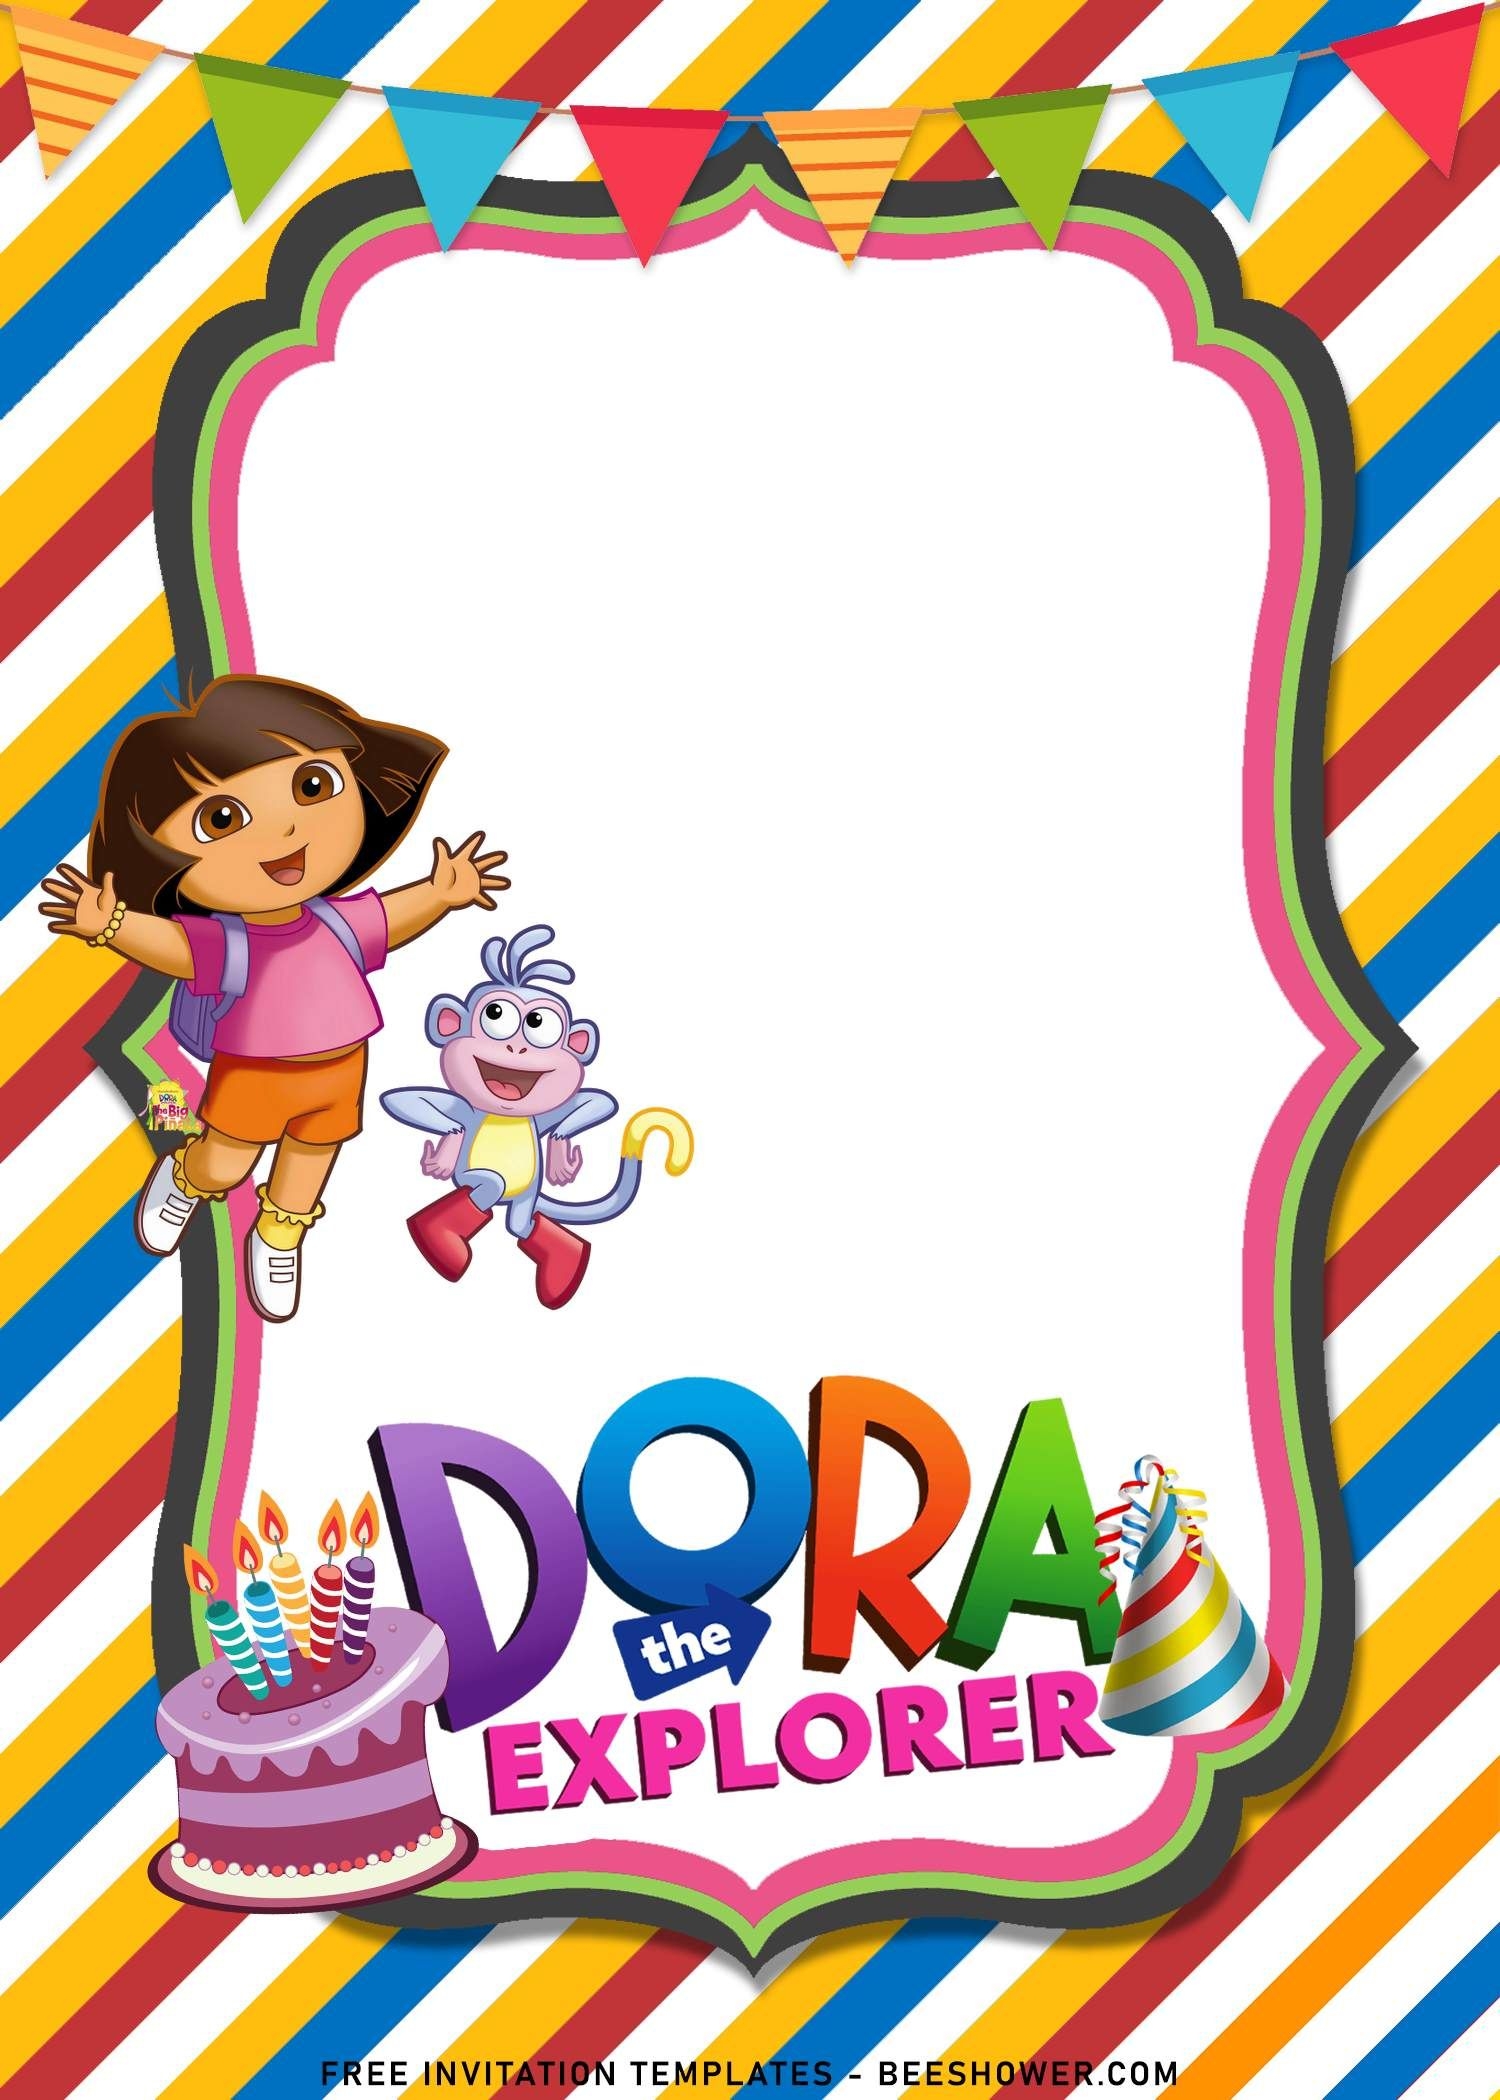 8 Dora The Explorer Birthday Invitation Templates For Your Kid s Birthday Birthday Card Template Birthday Invitation Templates Birthday Invitations - Dora The Explorer Free Printable Invitations